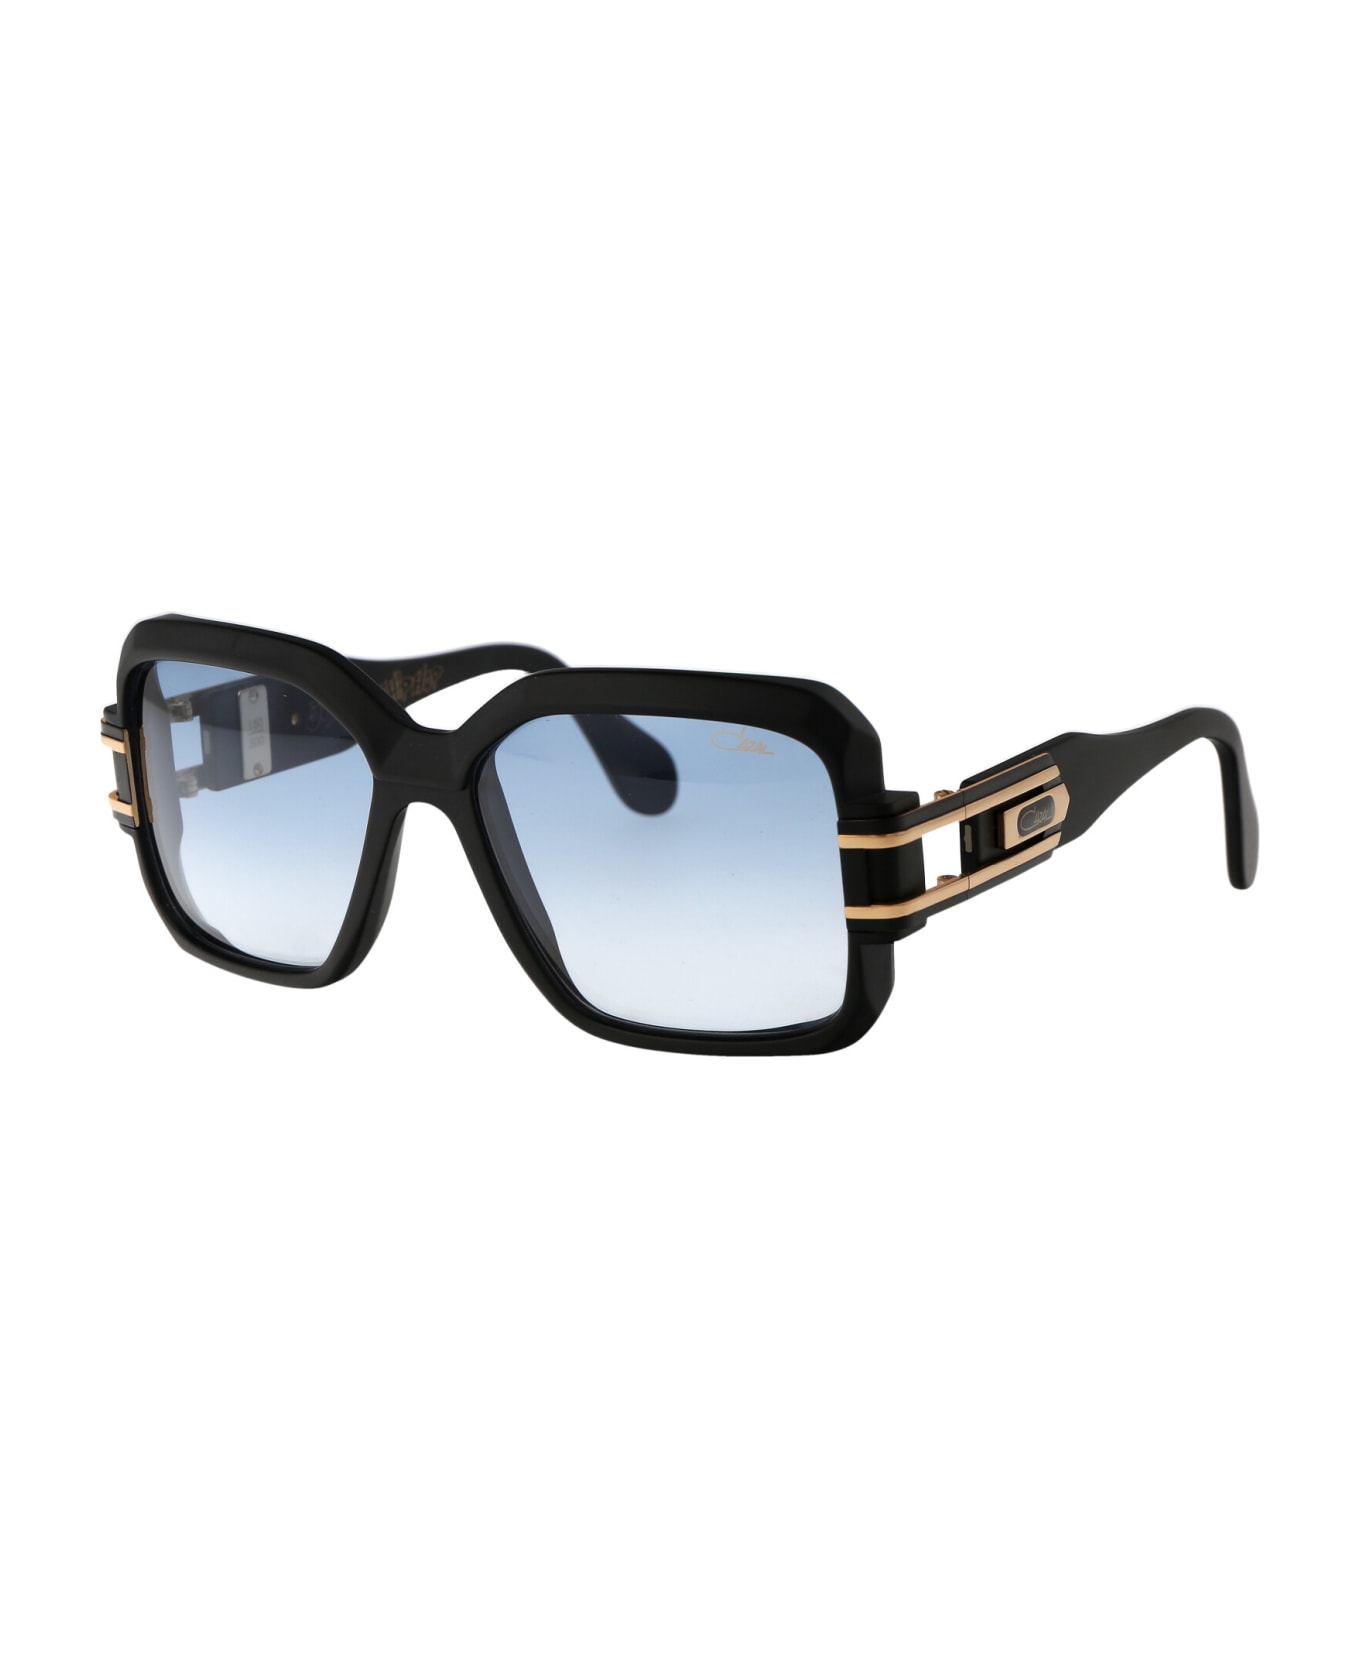 Cazal Mod. 623/3 Sunglasses - 050 BLACK